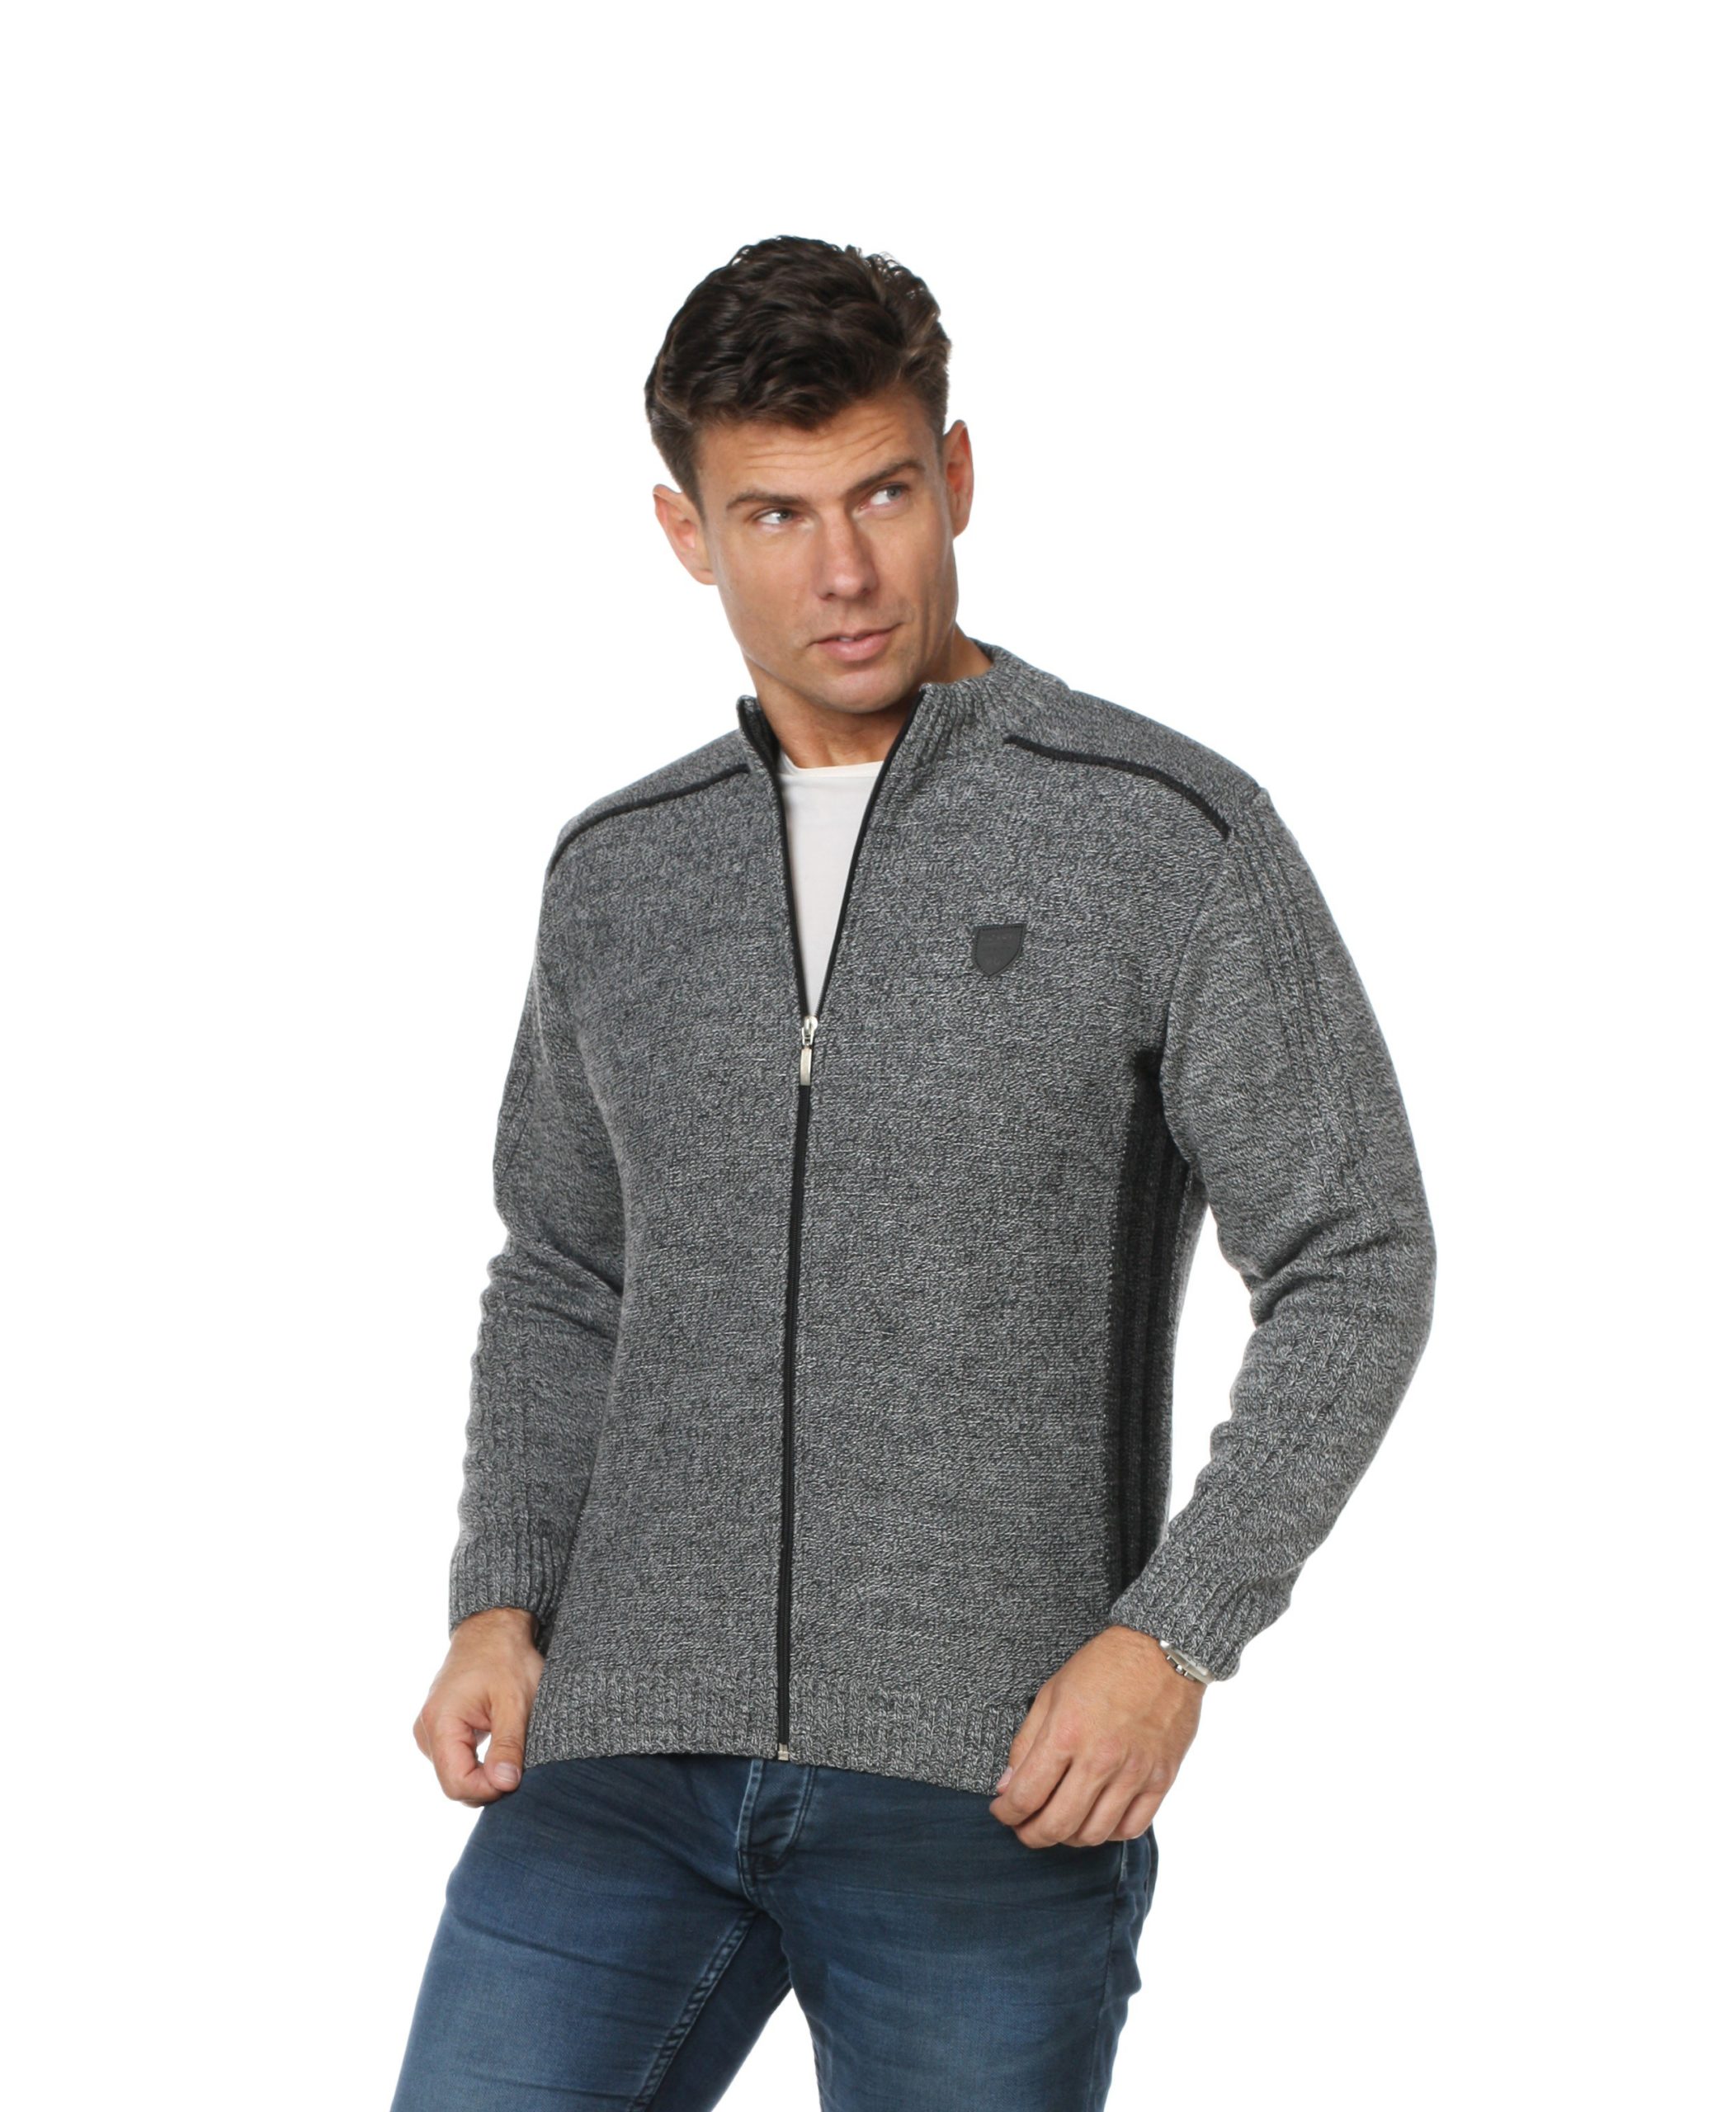 Sweter CASH jasny szary